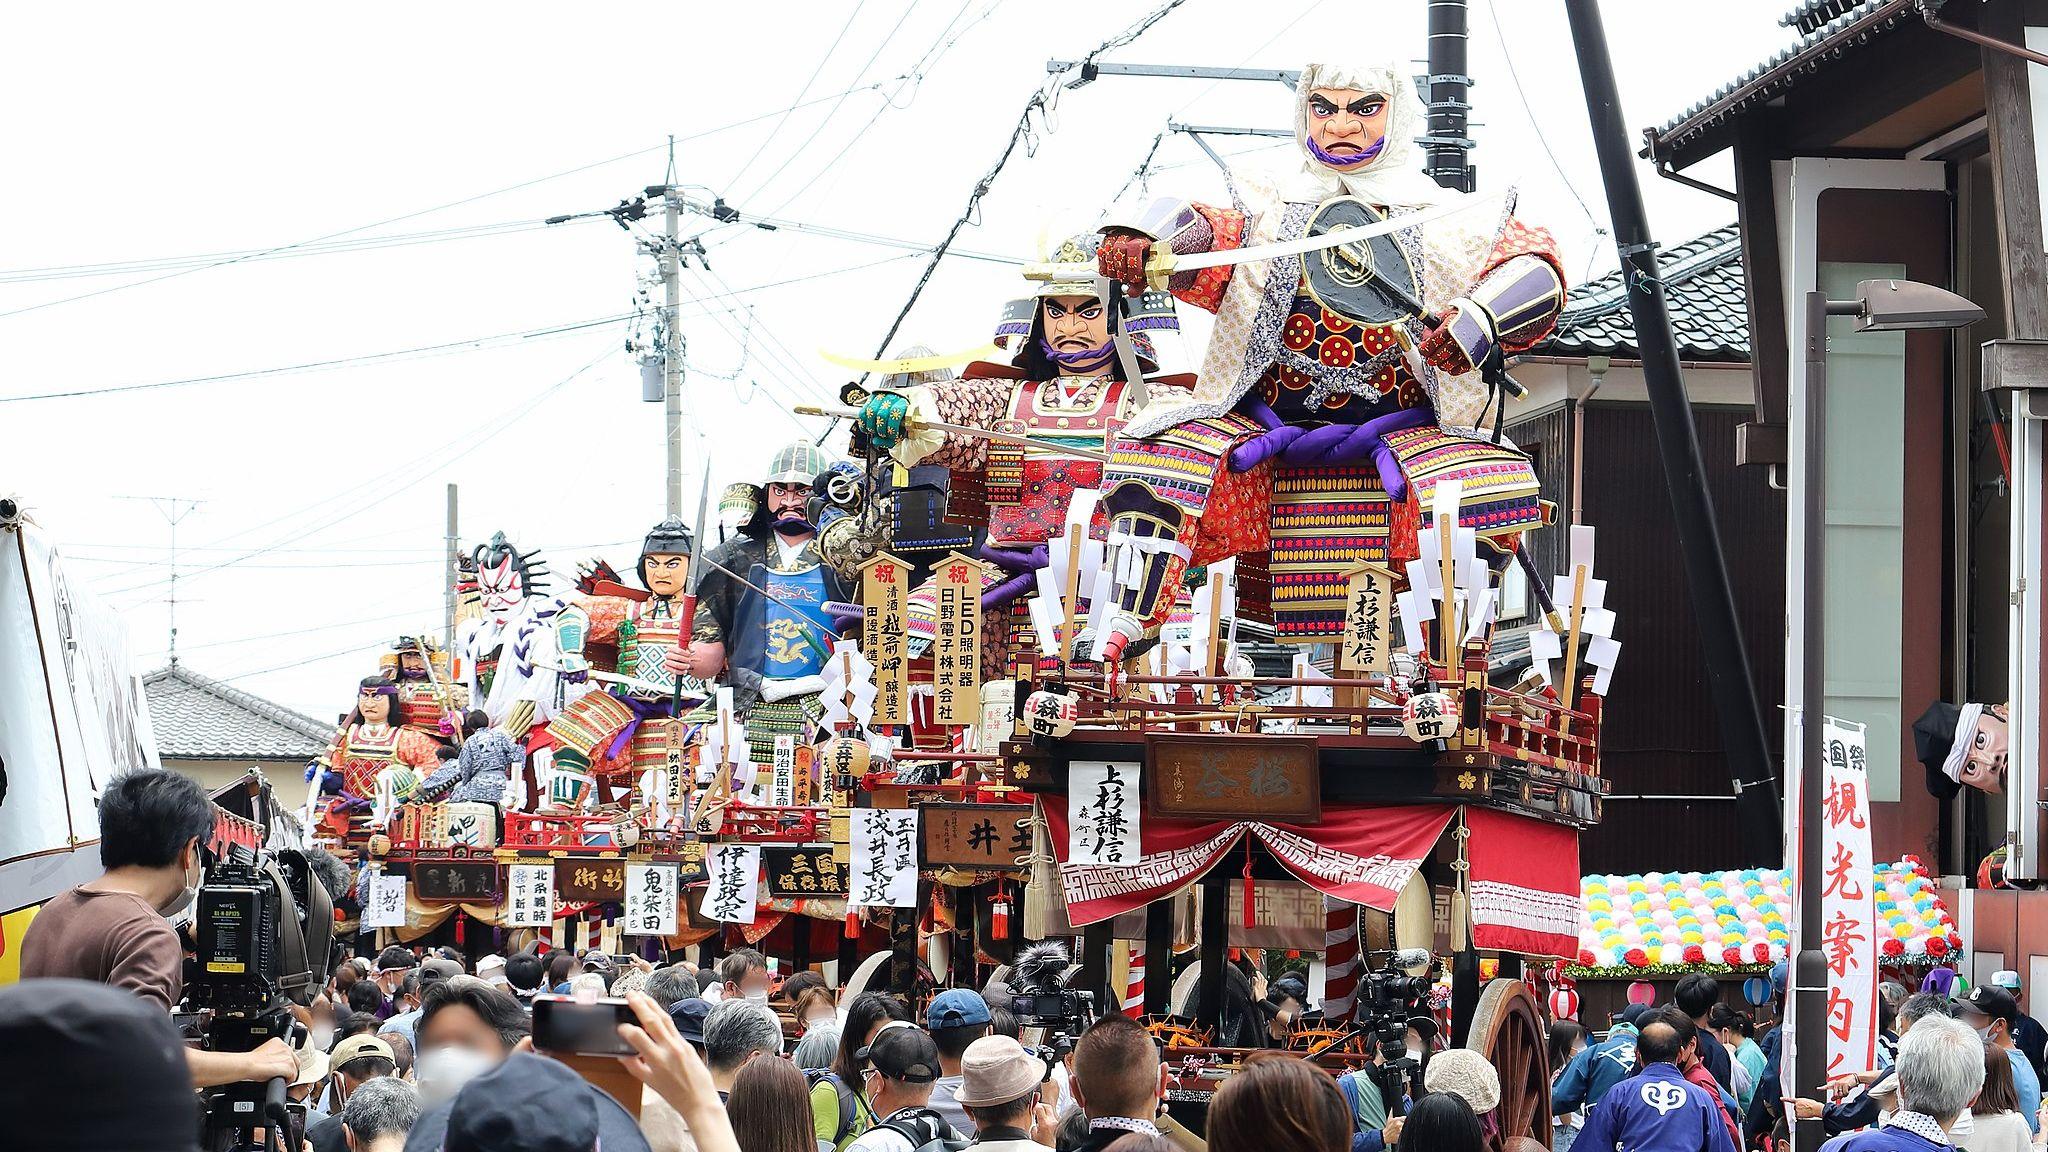 Mikuni floats at the Mikuni Shrine Festival